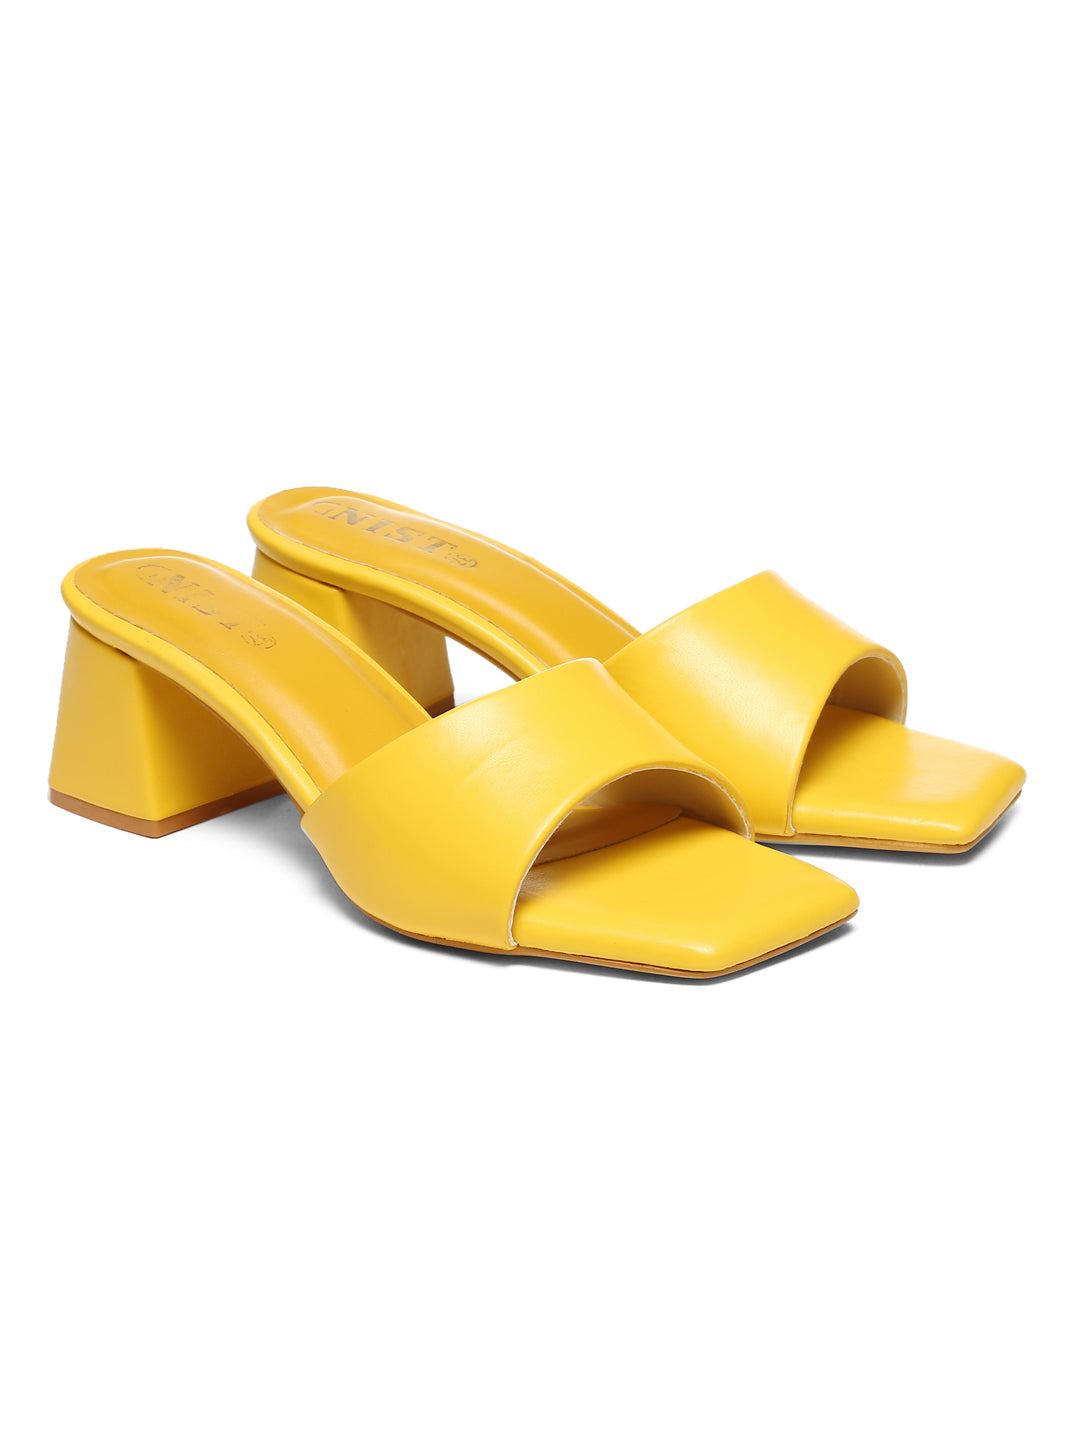 GNIST Yellow Chuncky Block Heel